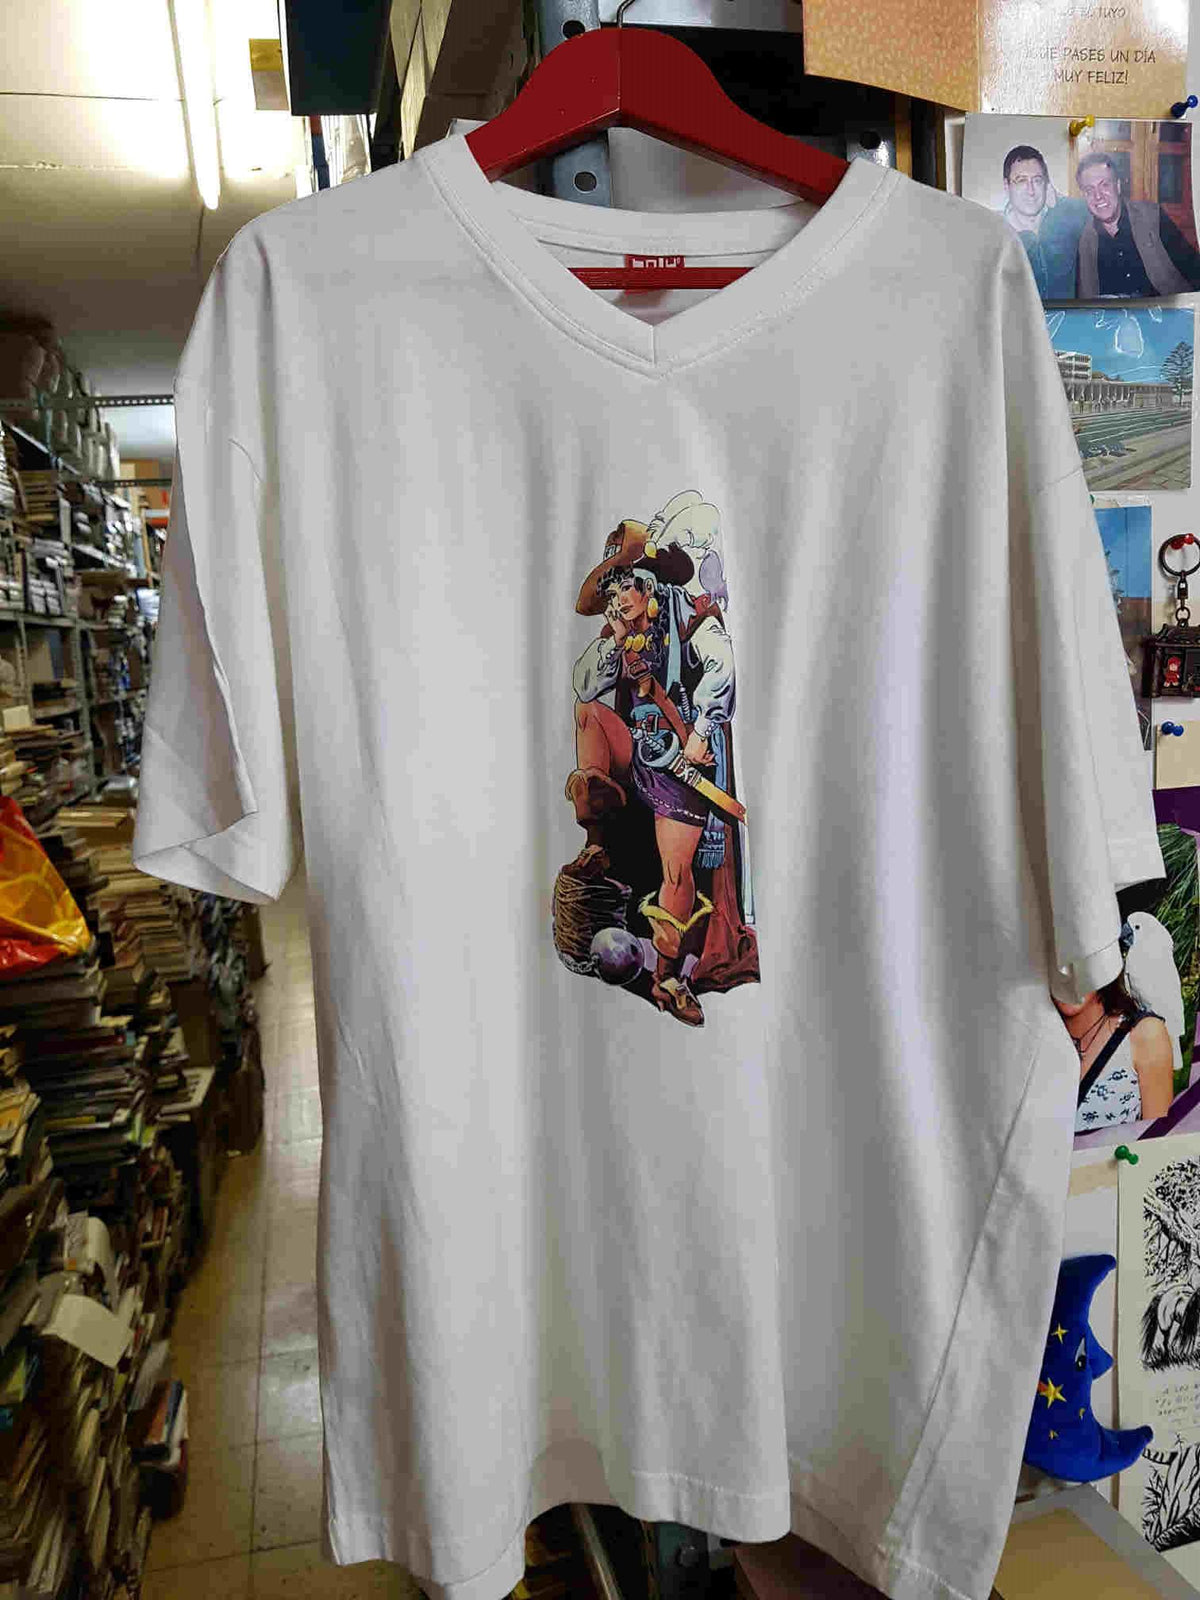 Camiseta blanca de La Capitana, por Matias Alonso. Talla XXL